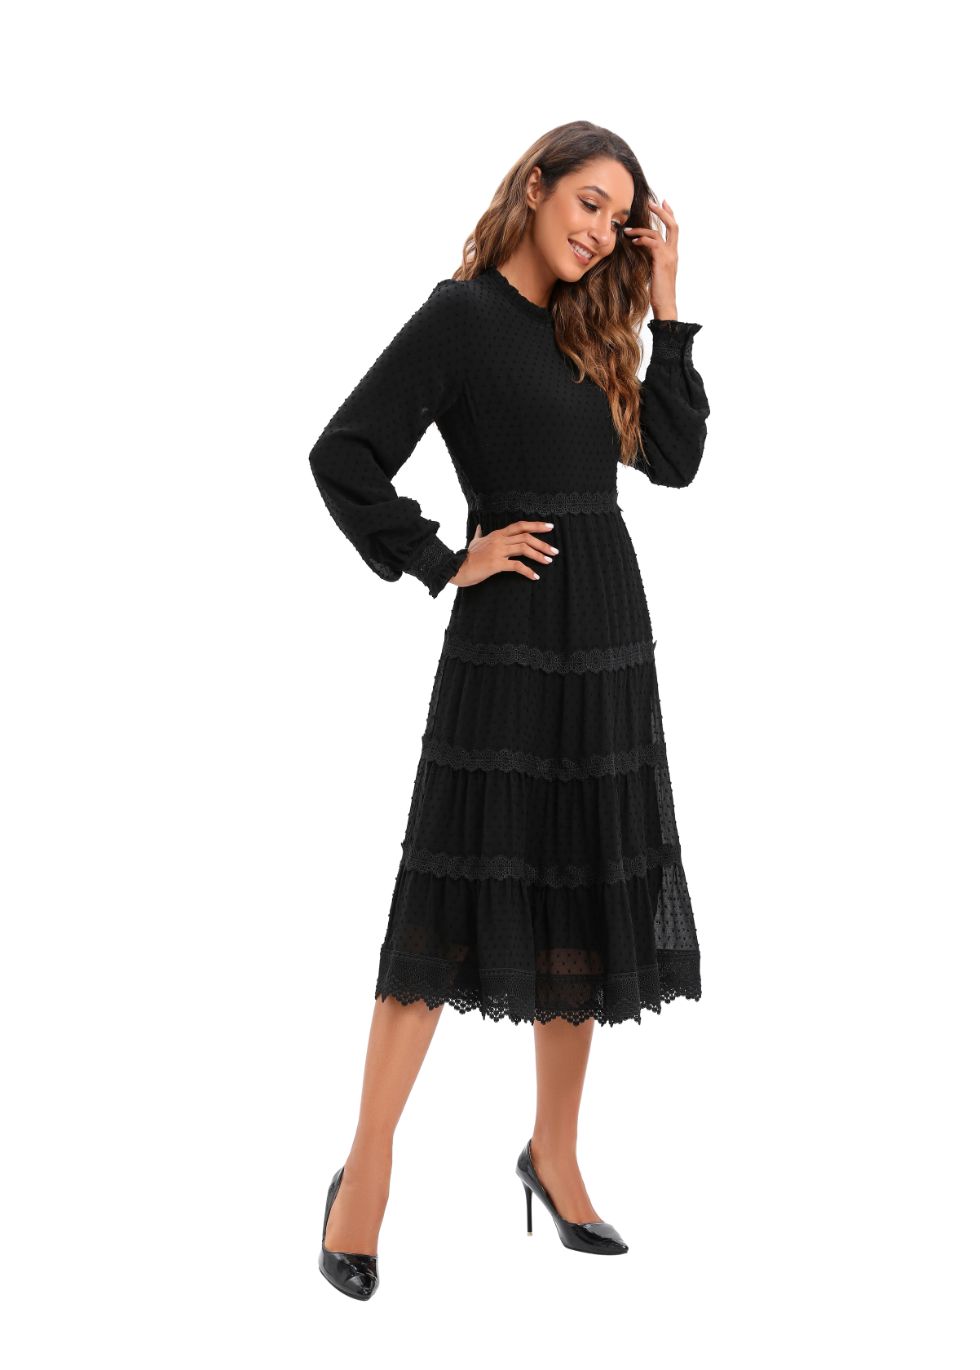 Modest Elegant Long Sleeves  Black Dress W/ Lace trimming 3086 - seilerlanguageservices